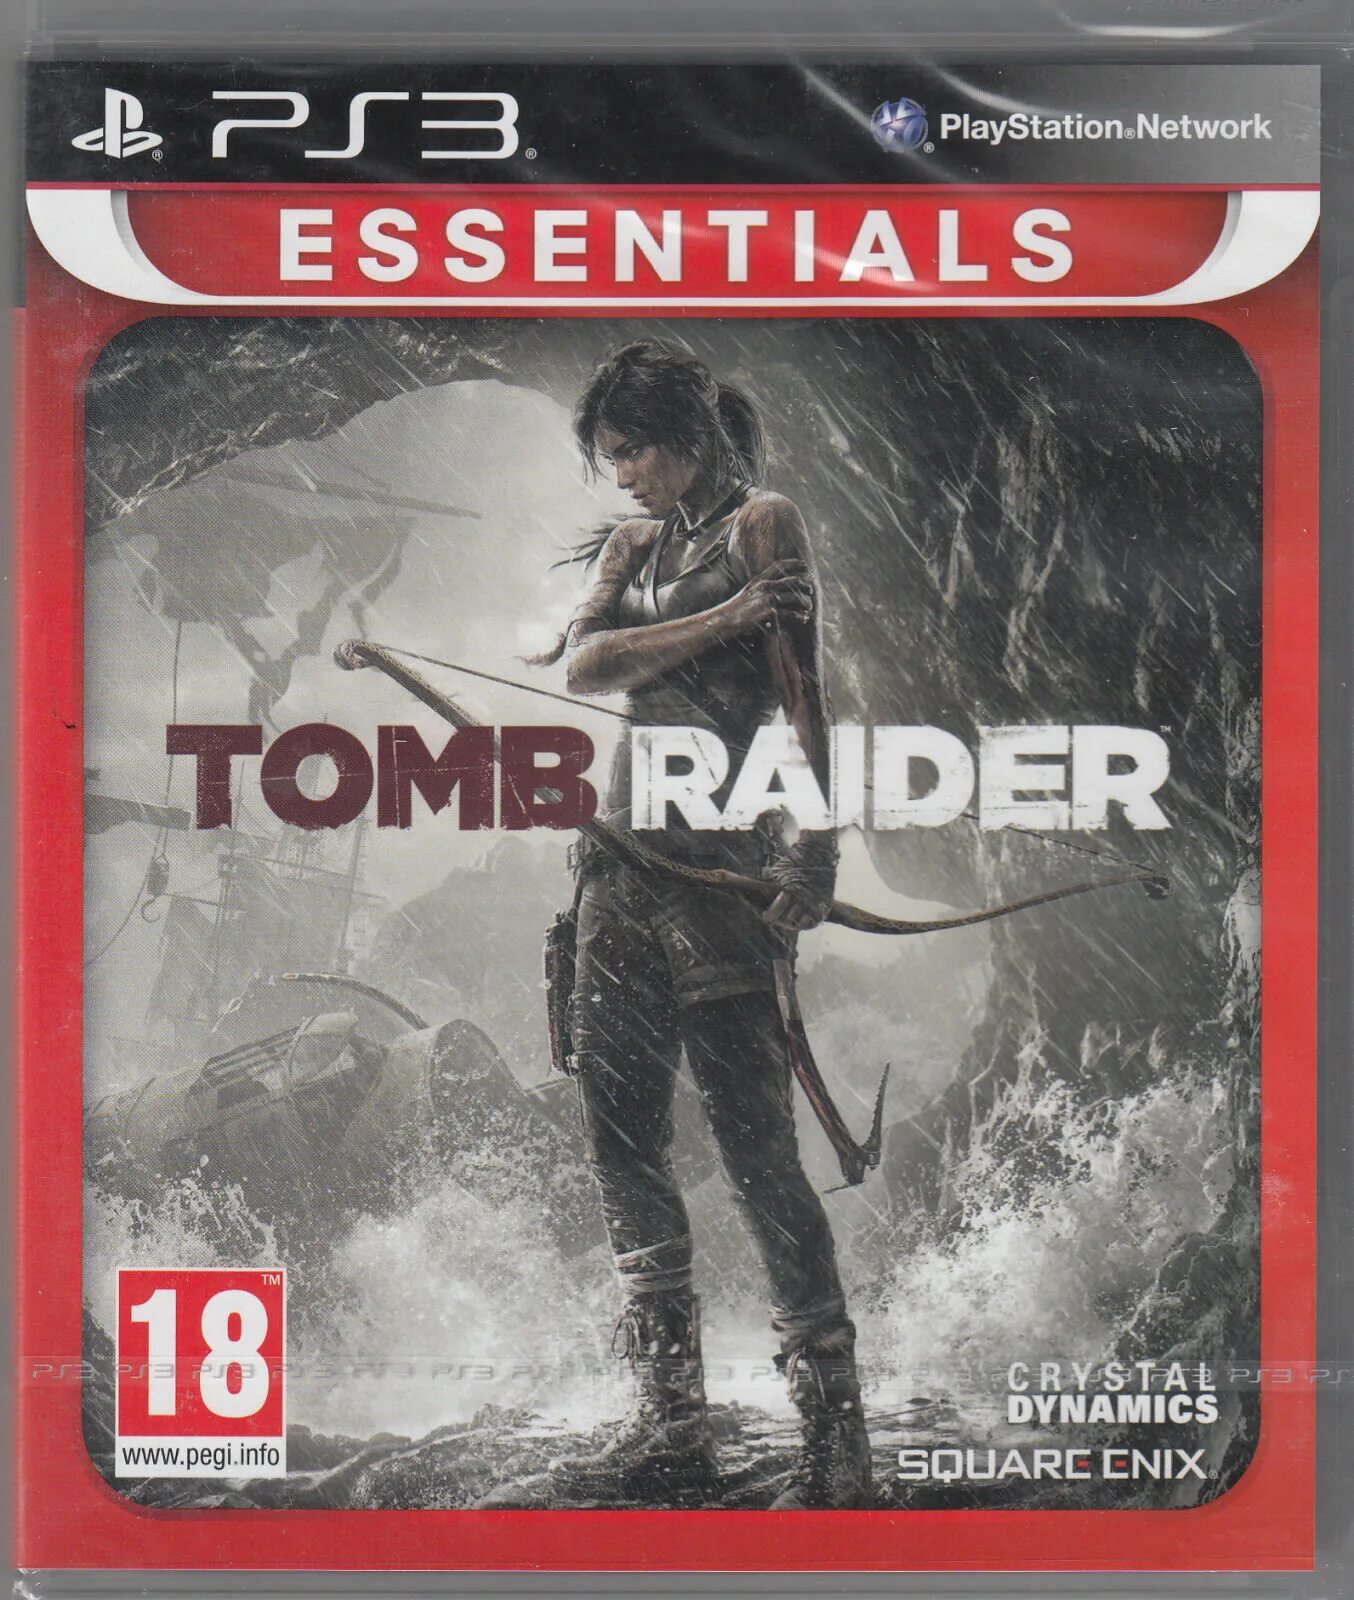 Ps3 tom. Томб Райдер хбокс 360. Tomb Raider 2013 ps3 обложка. Том Райдер на хбокс 360.